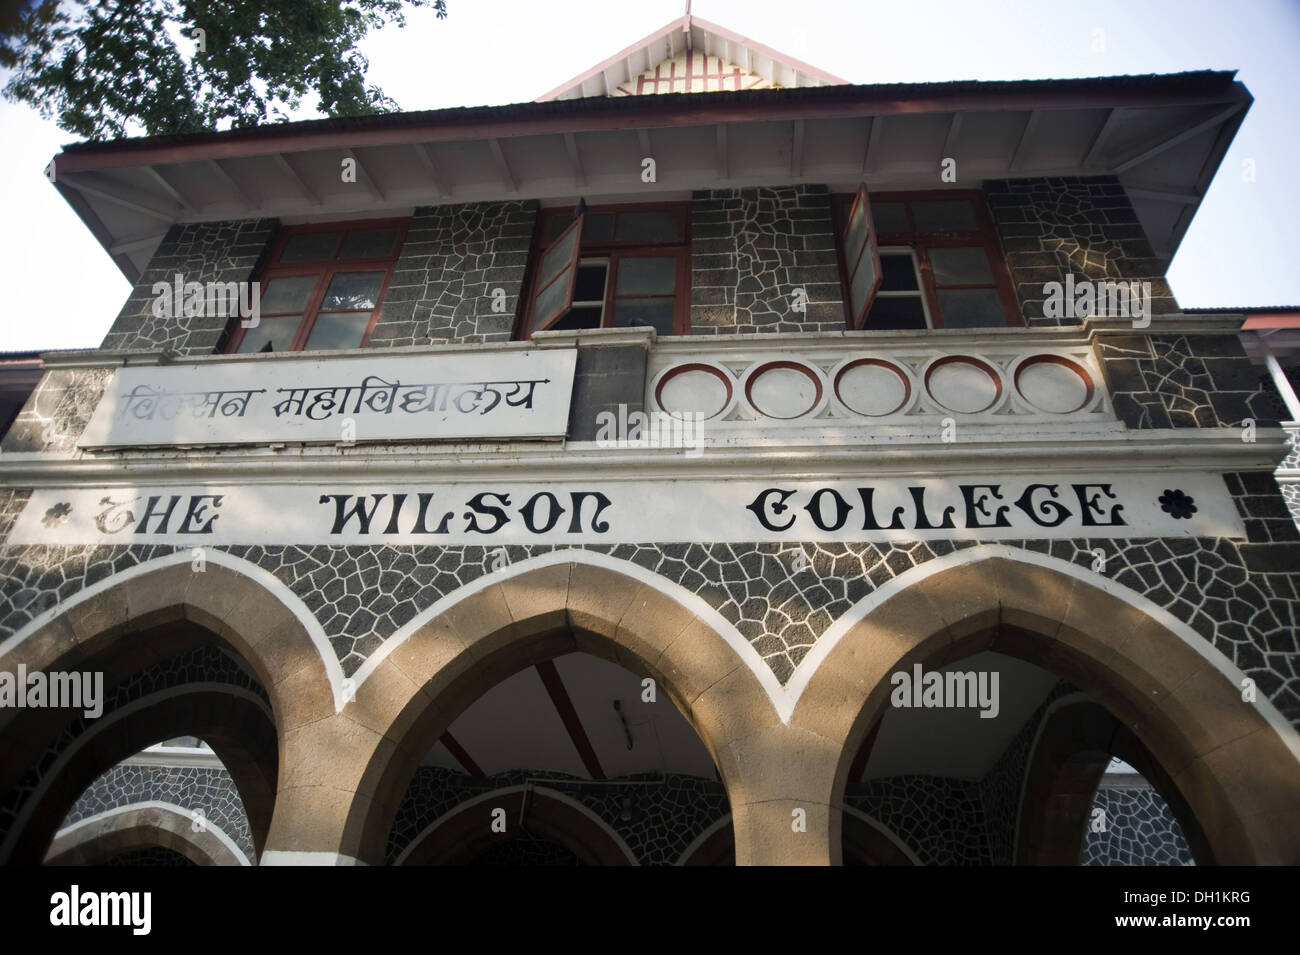 wilson college at mumbai maharashtra India Stock Photo